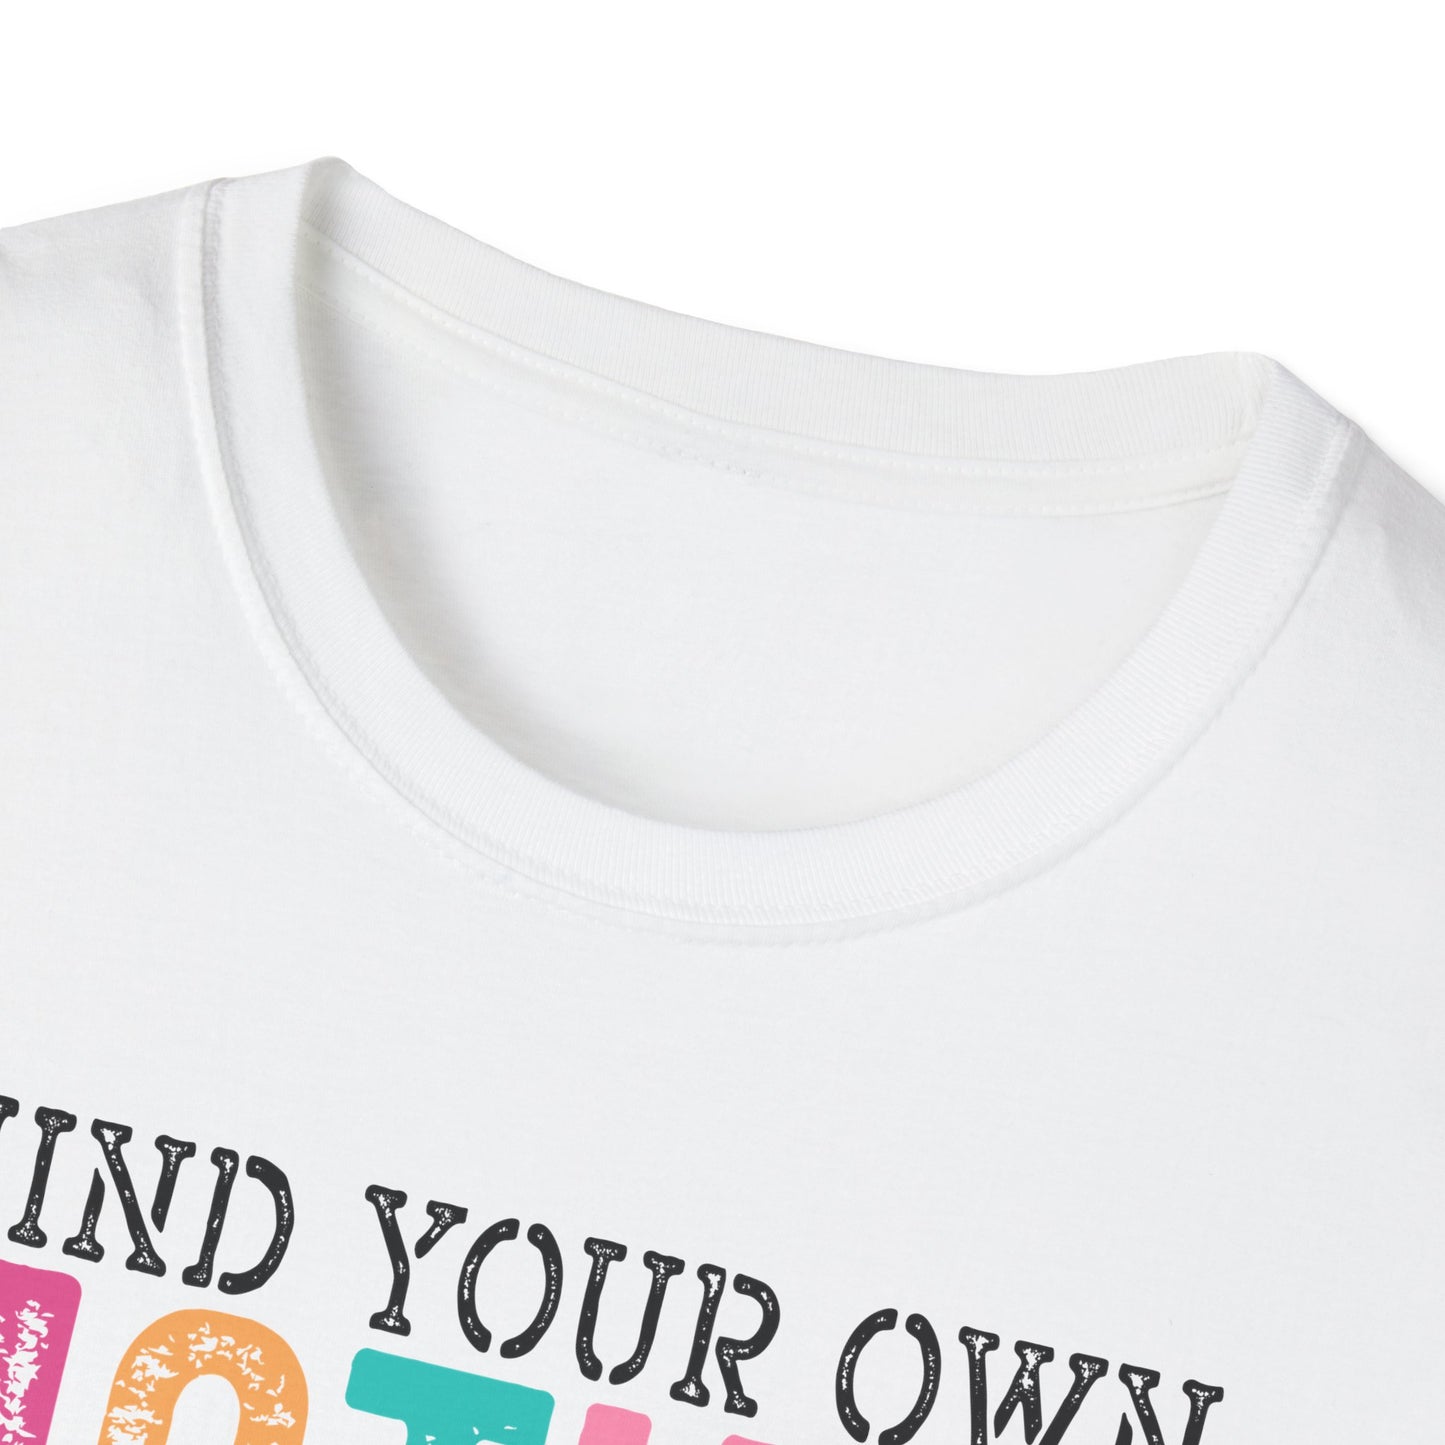 Mind Your Own Motherhood - Unisex Softstyle T-Shirt